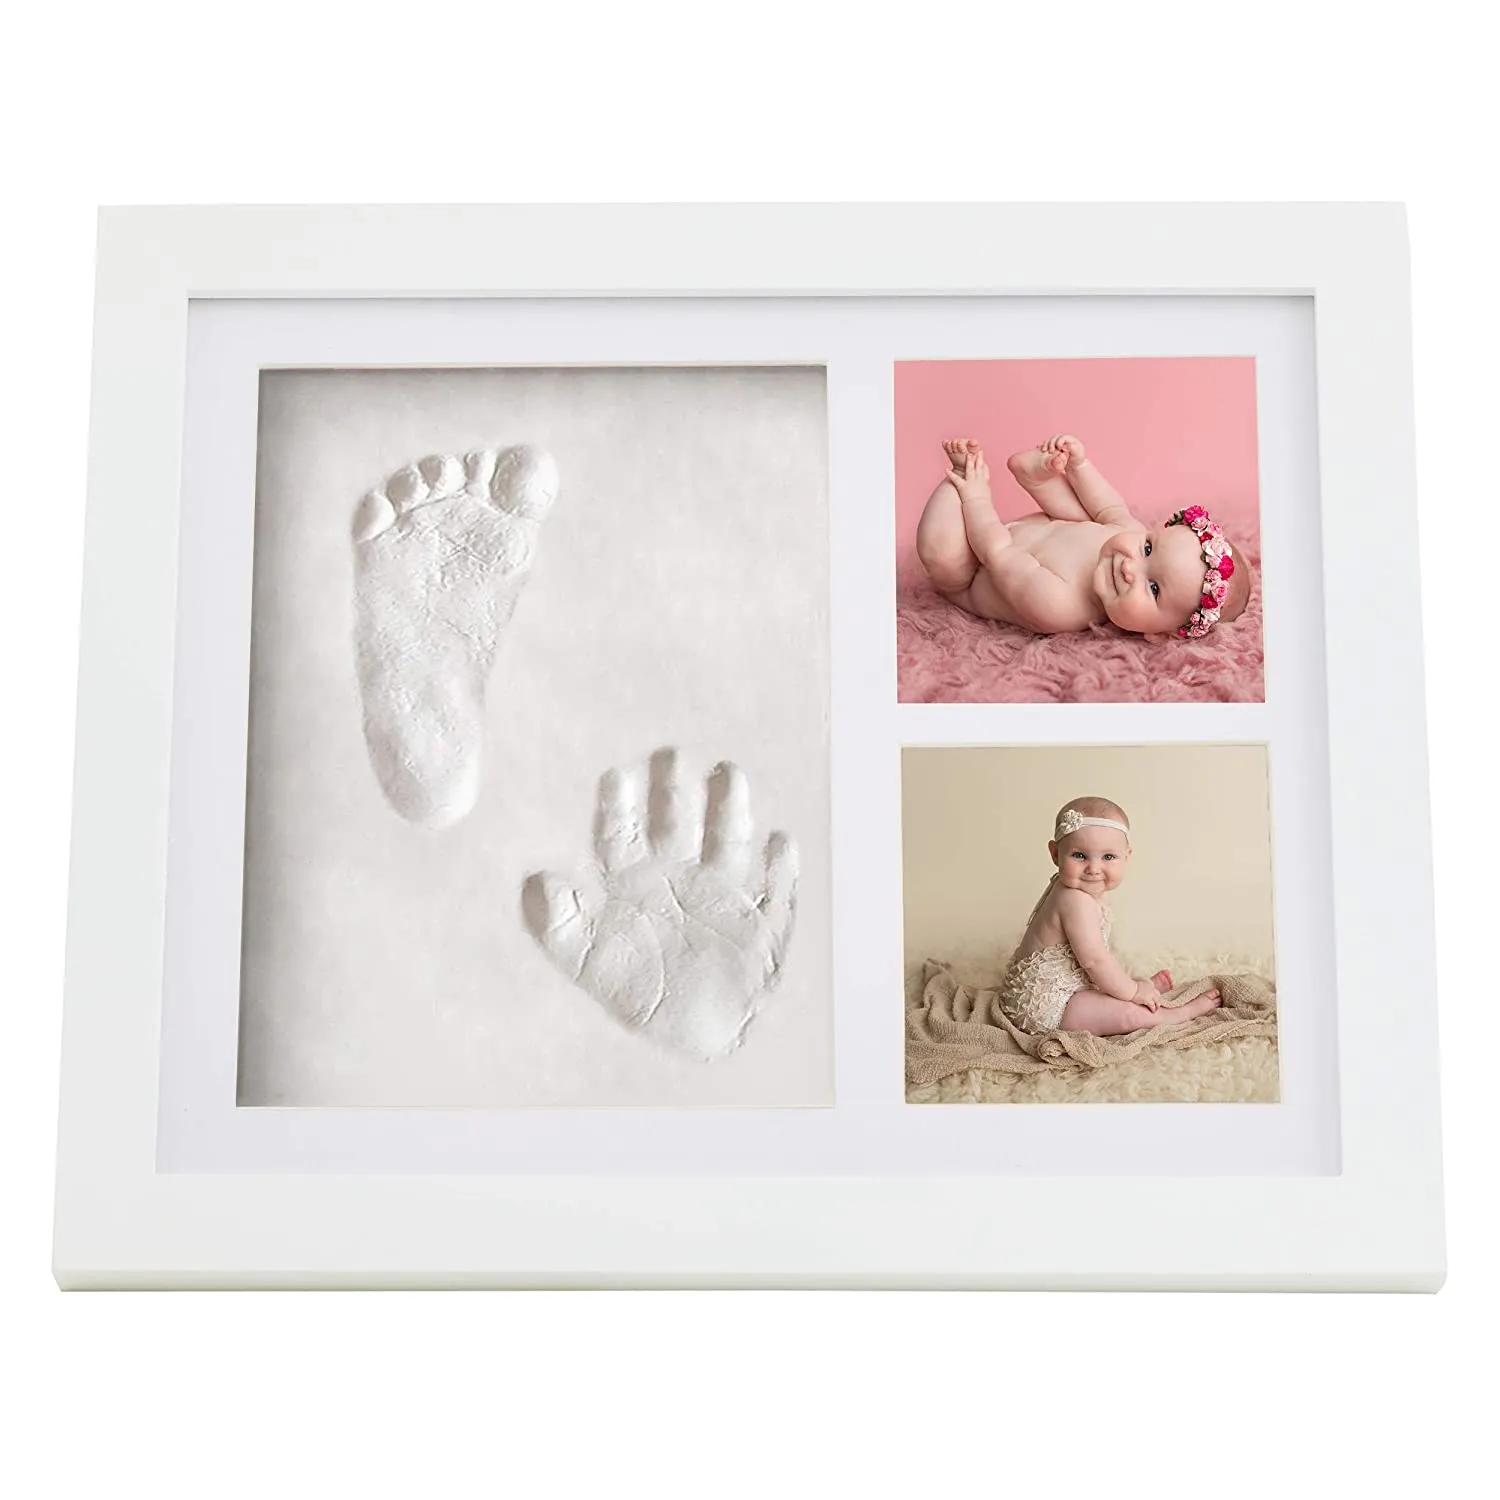 Baby Shower New Mom Gift Ylu Yni Baby Handprint Frame Newborn Baby Footprint Kit with Photo Frame Non-Toxic Clay Keepsake Handprint Kit 